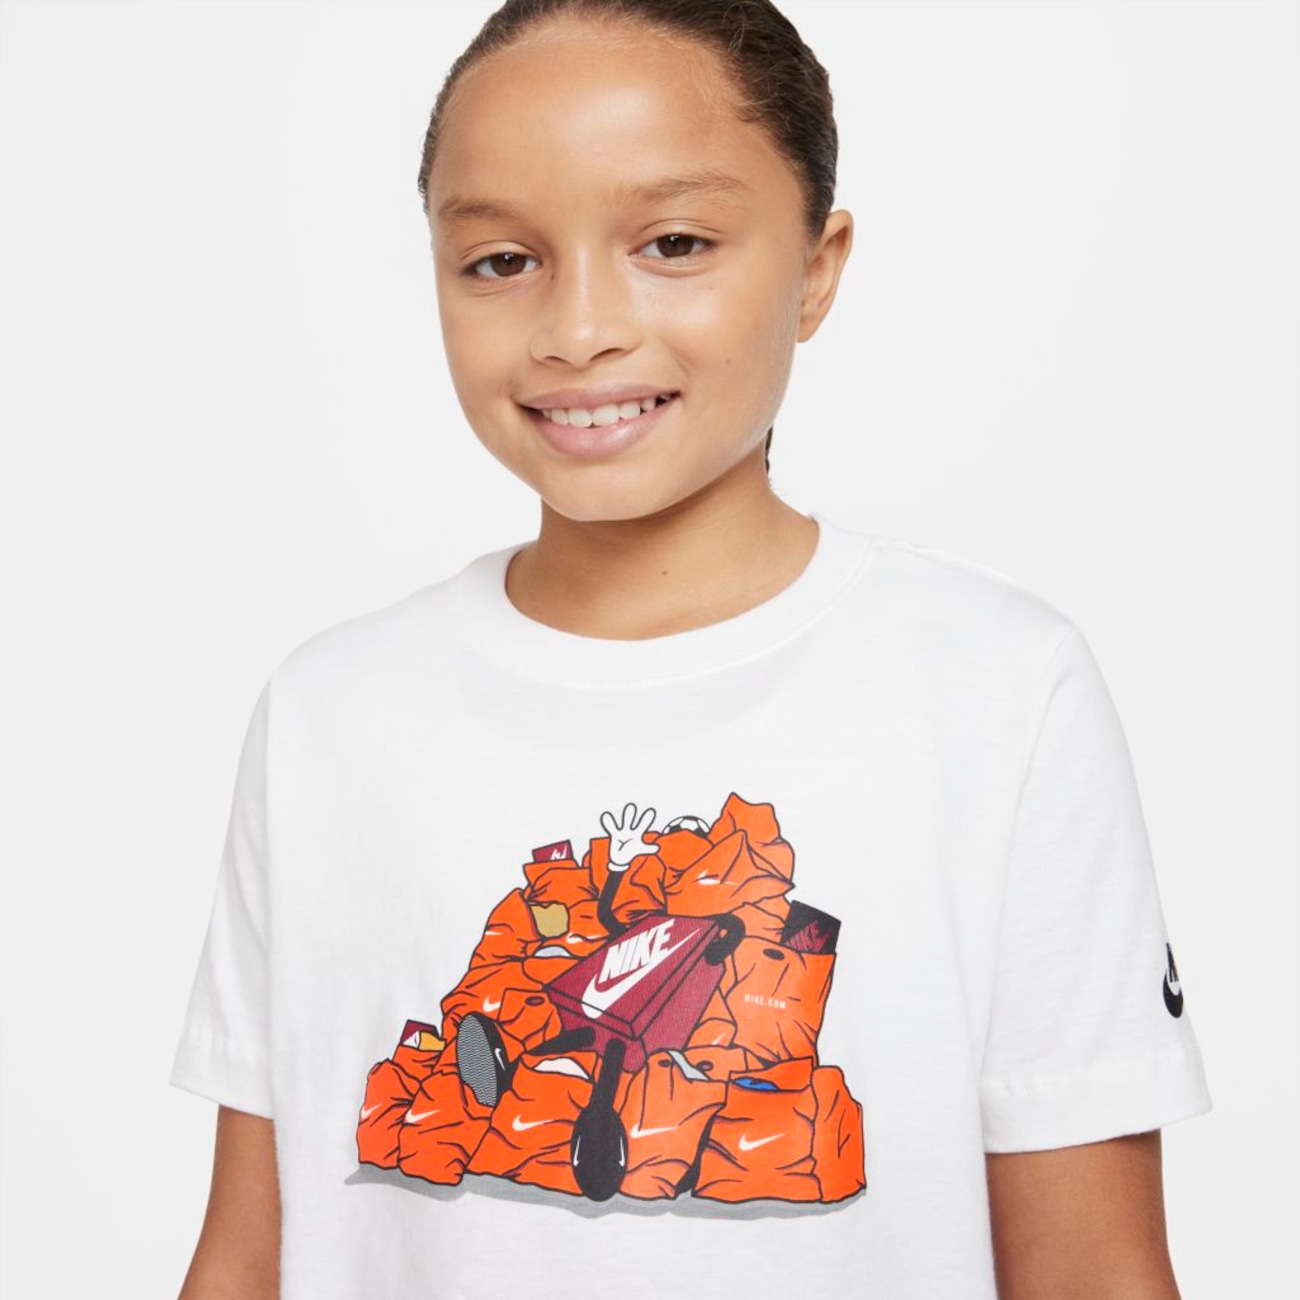 Camiseta Nike Sportswear Infantil - Foto 3